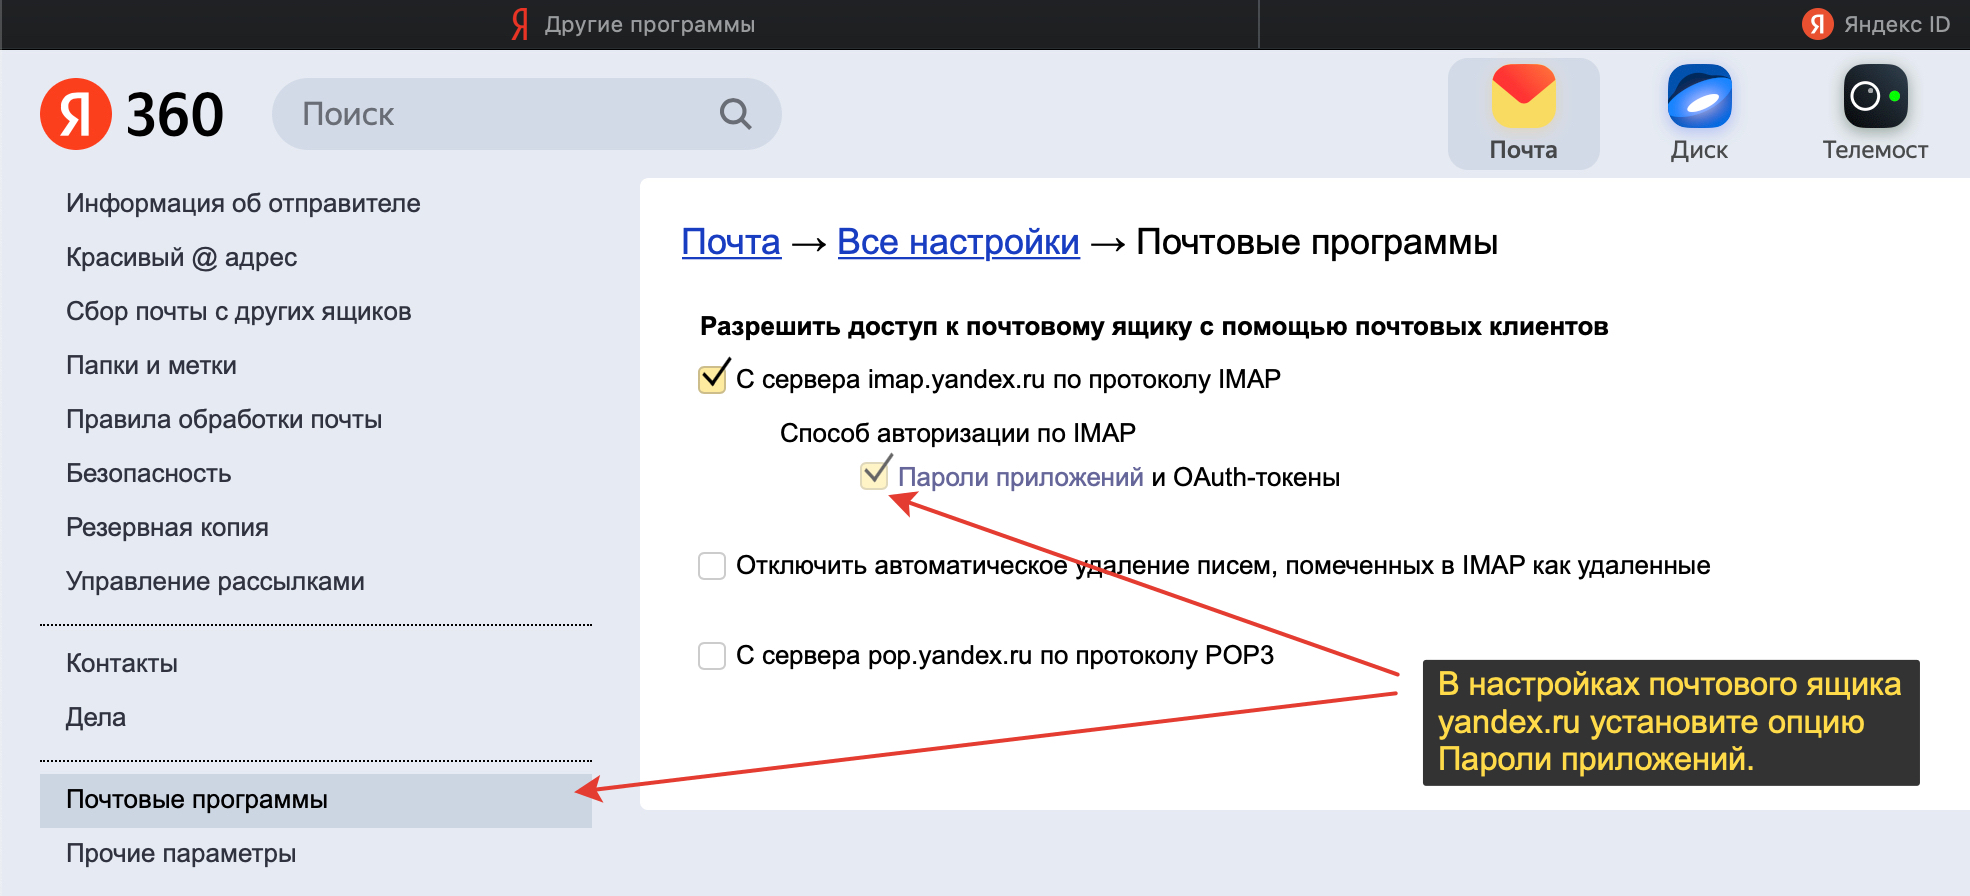 Ссылка на сайт приложения Яндекс